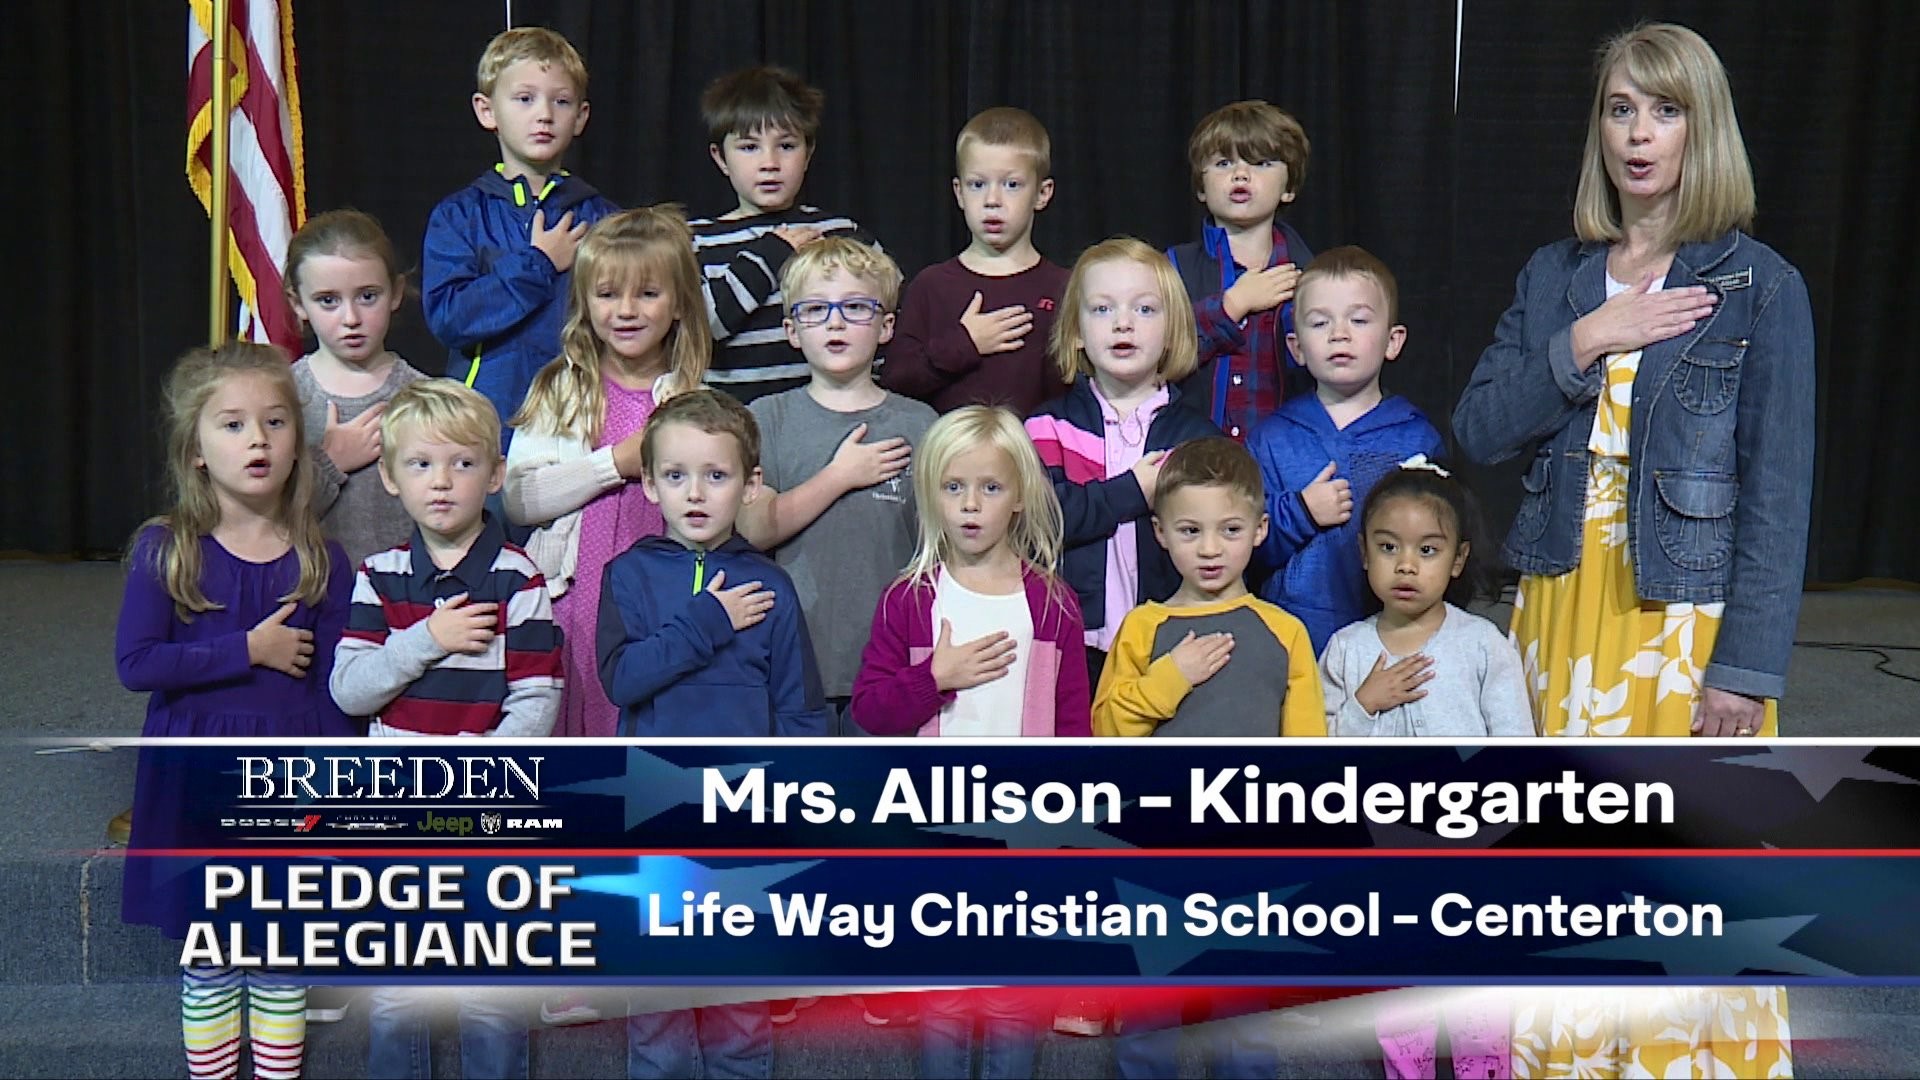 Mrs. Allison Kindergarten Life Way Christian School, Centerton